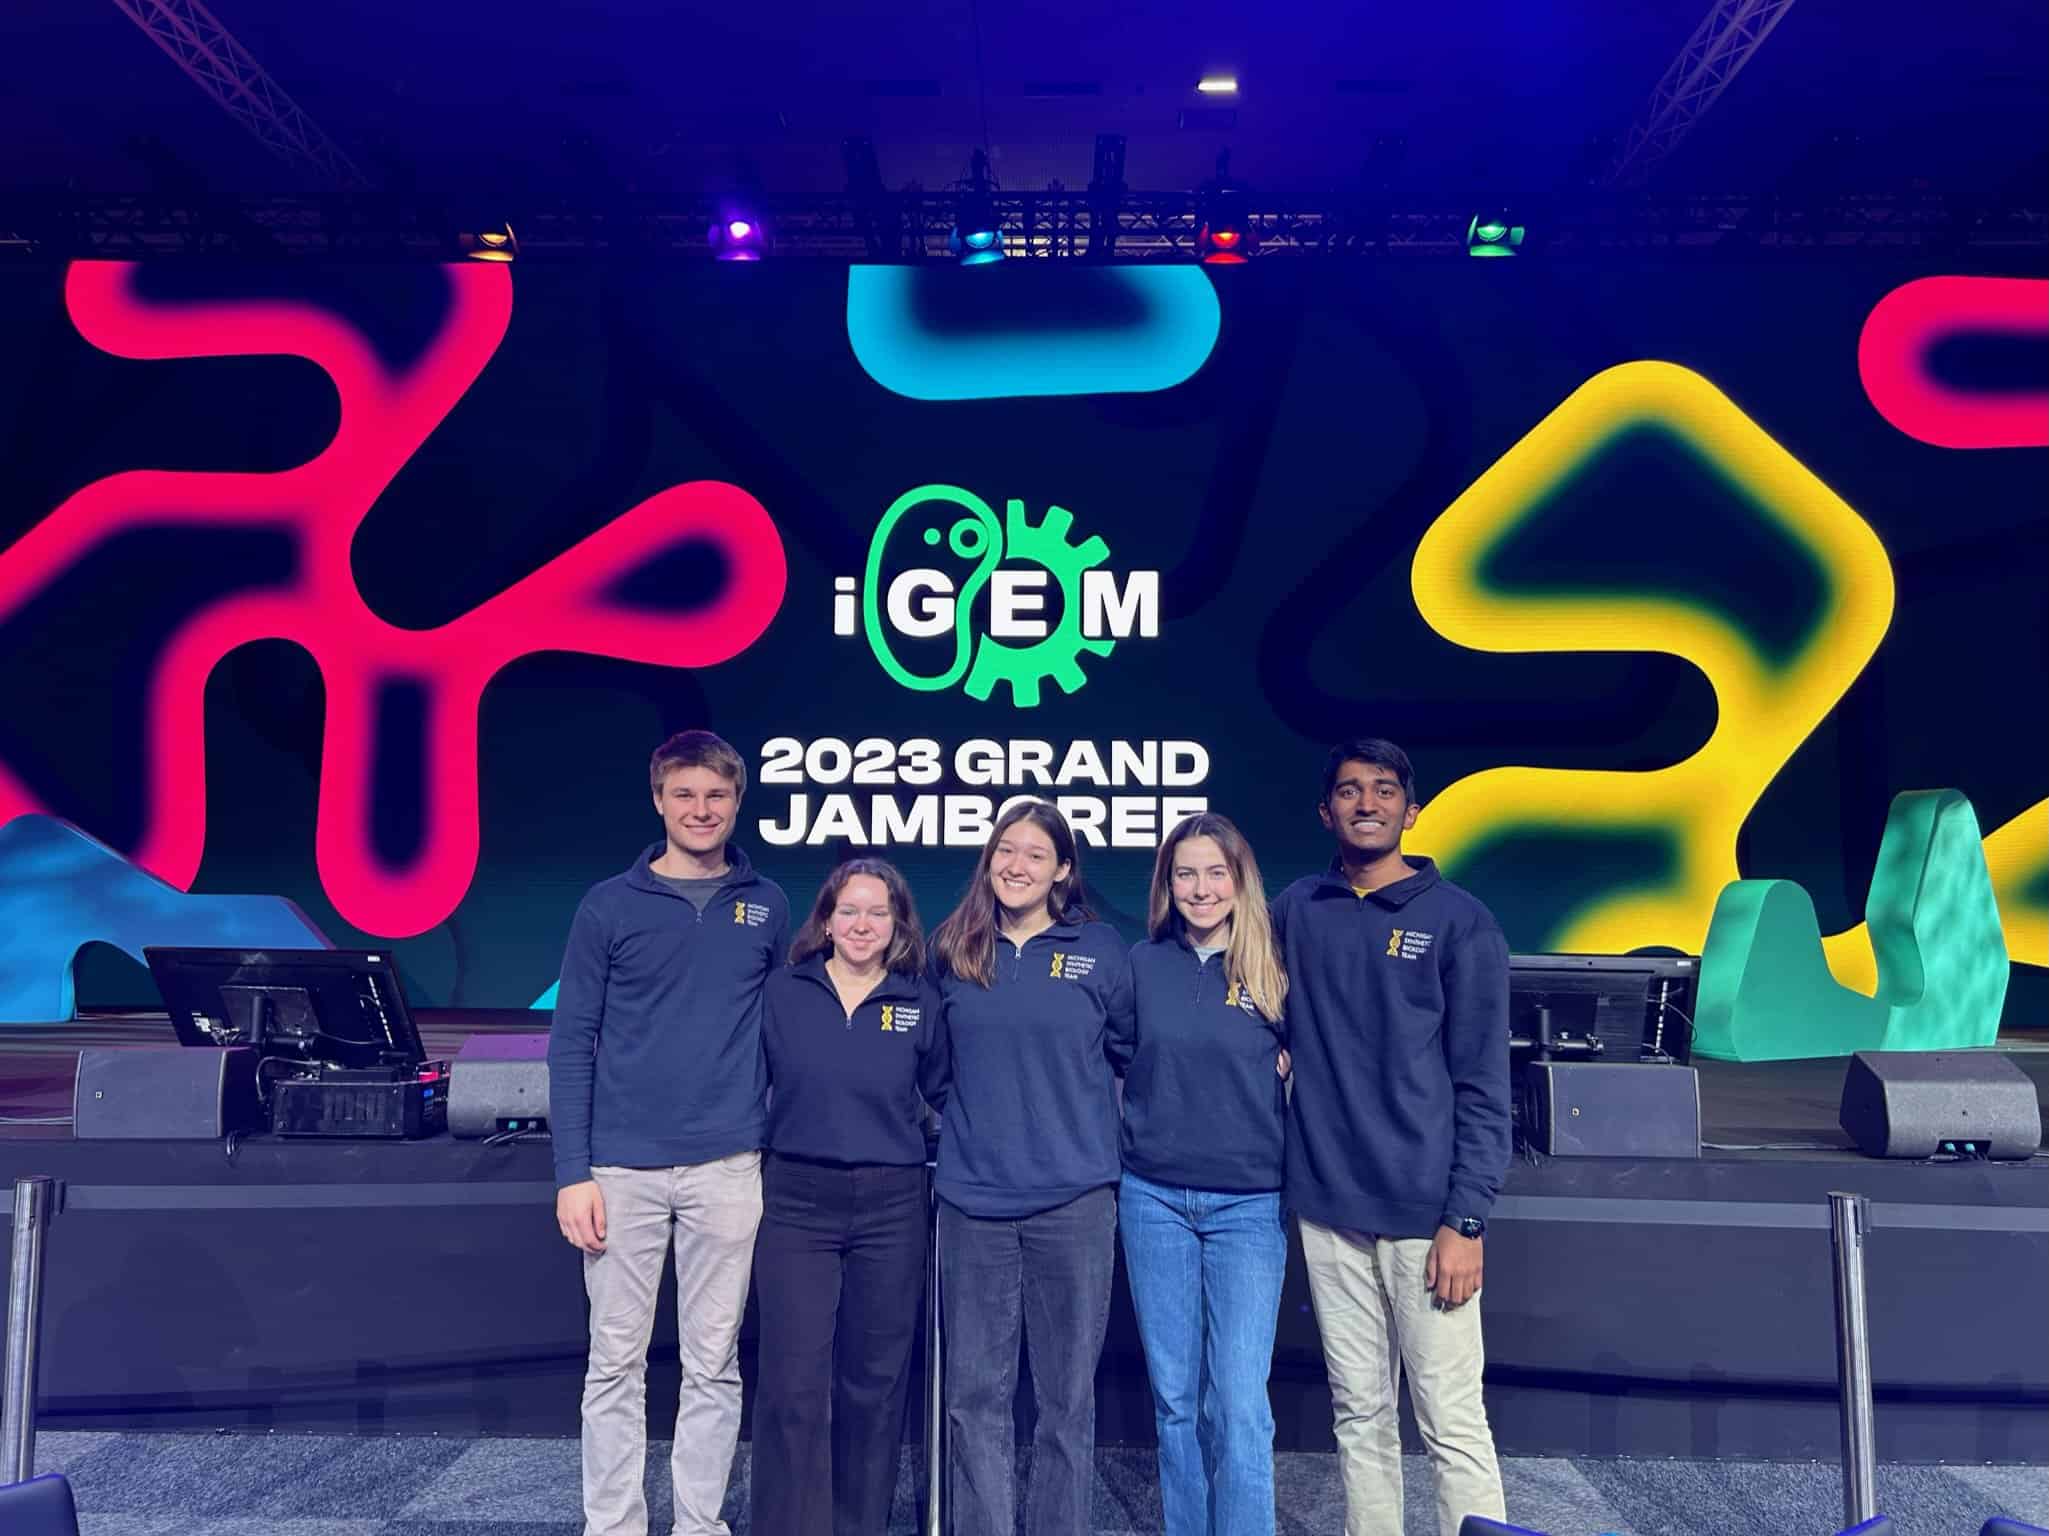 Michigan Synthetic Biology Team Celebrates iGEM Grand Jamboree Gold, Focuses on Future Challenges